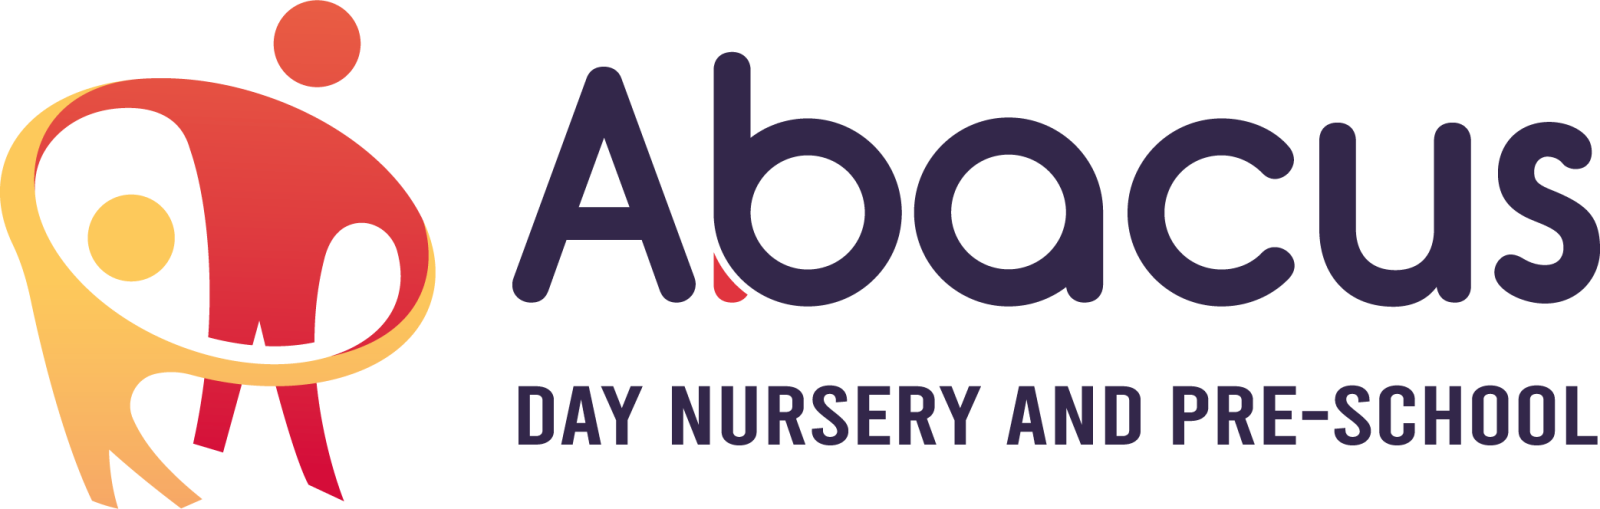 Abacus Day Nursery & Pre-School